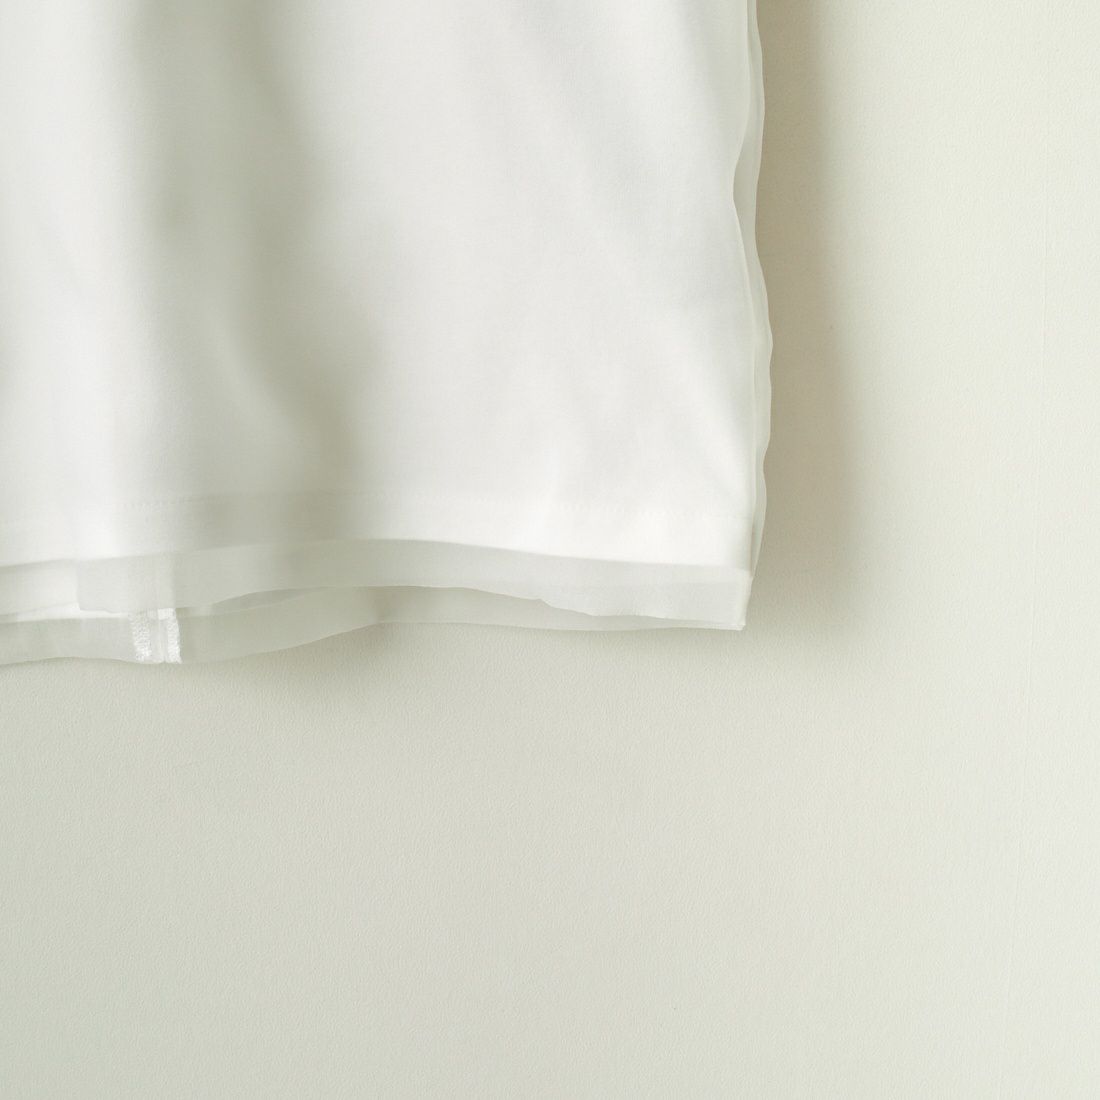 MICA&DEAL [マイカアンドディール] オーガンジーレイヤードTシャツ [0123209087] WHITE